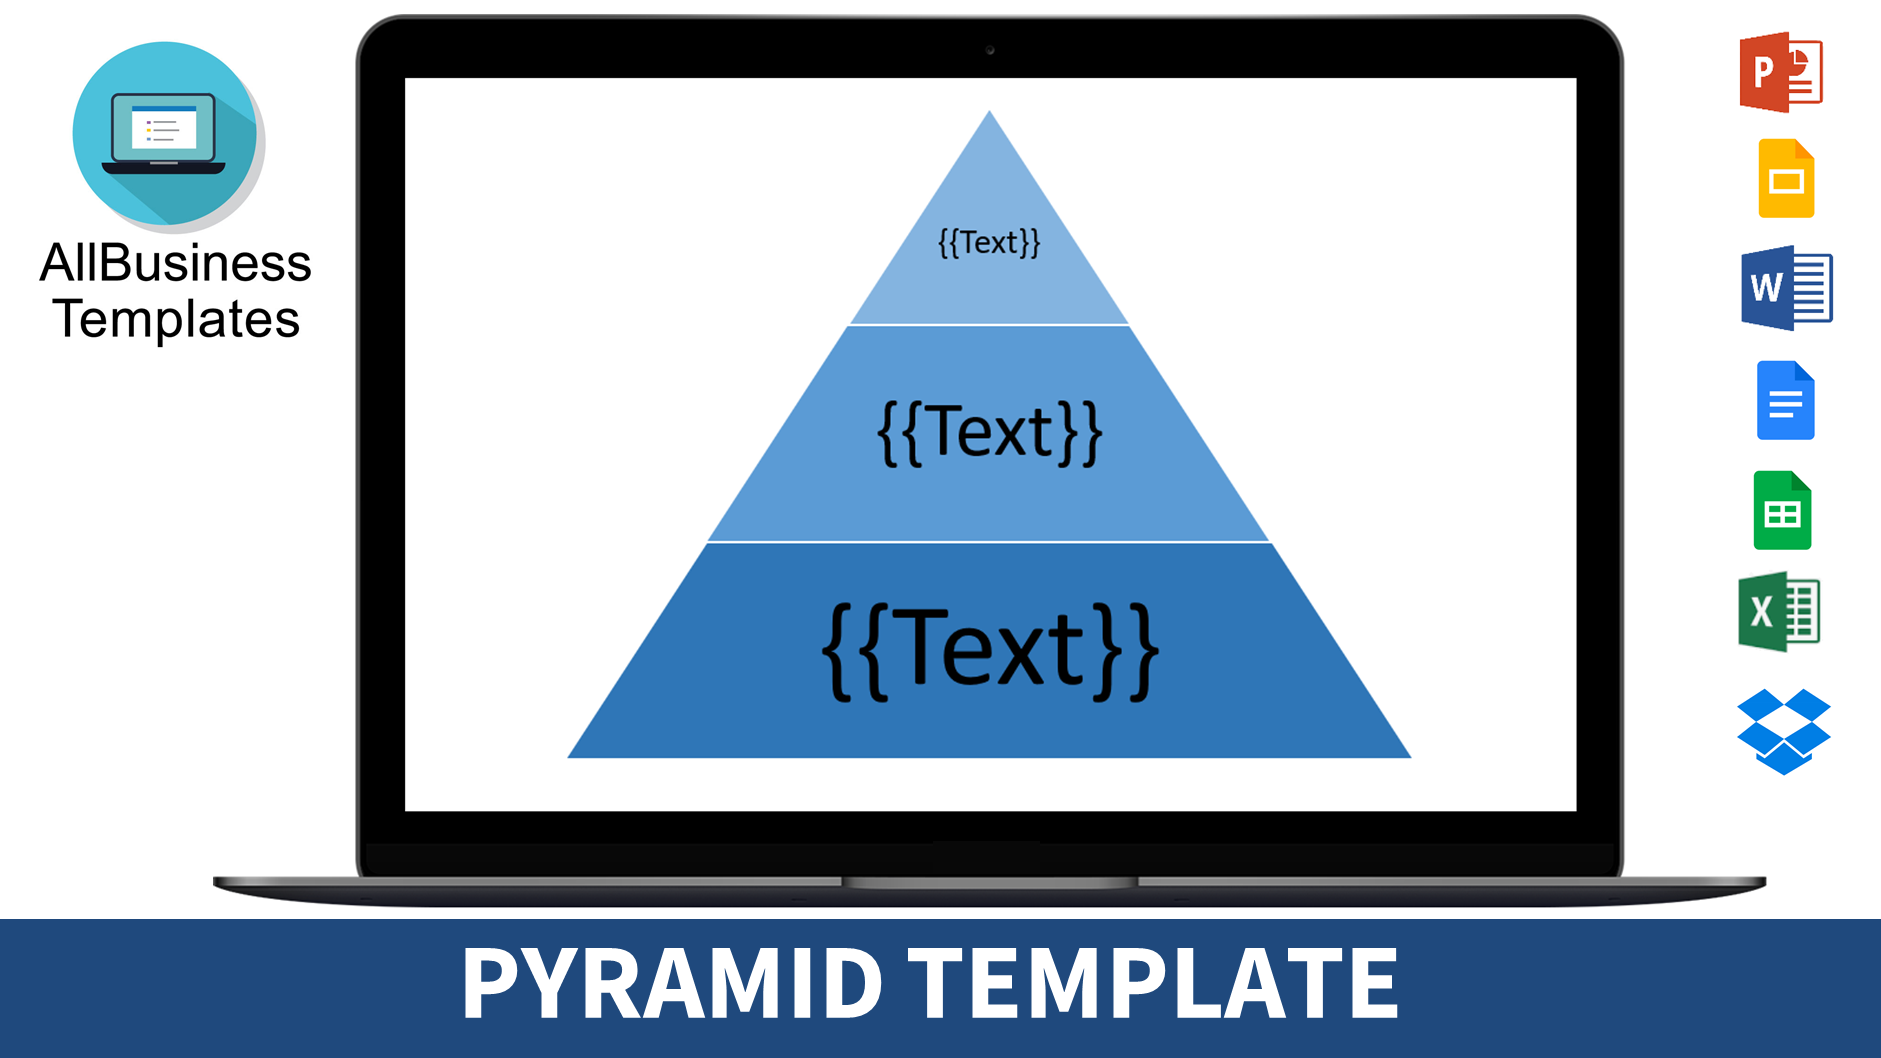 Pyramid Template main image